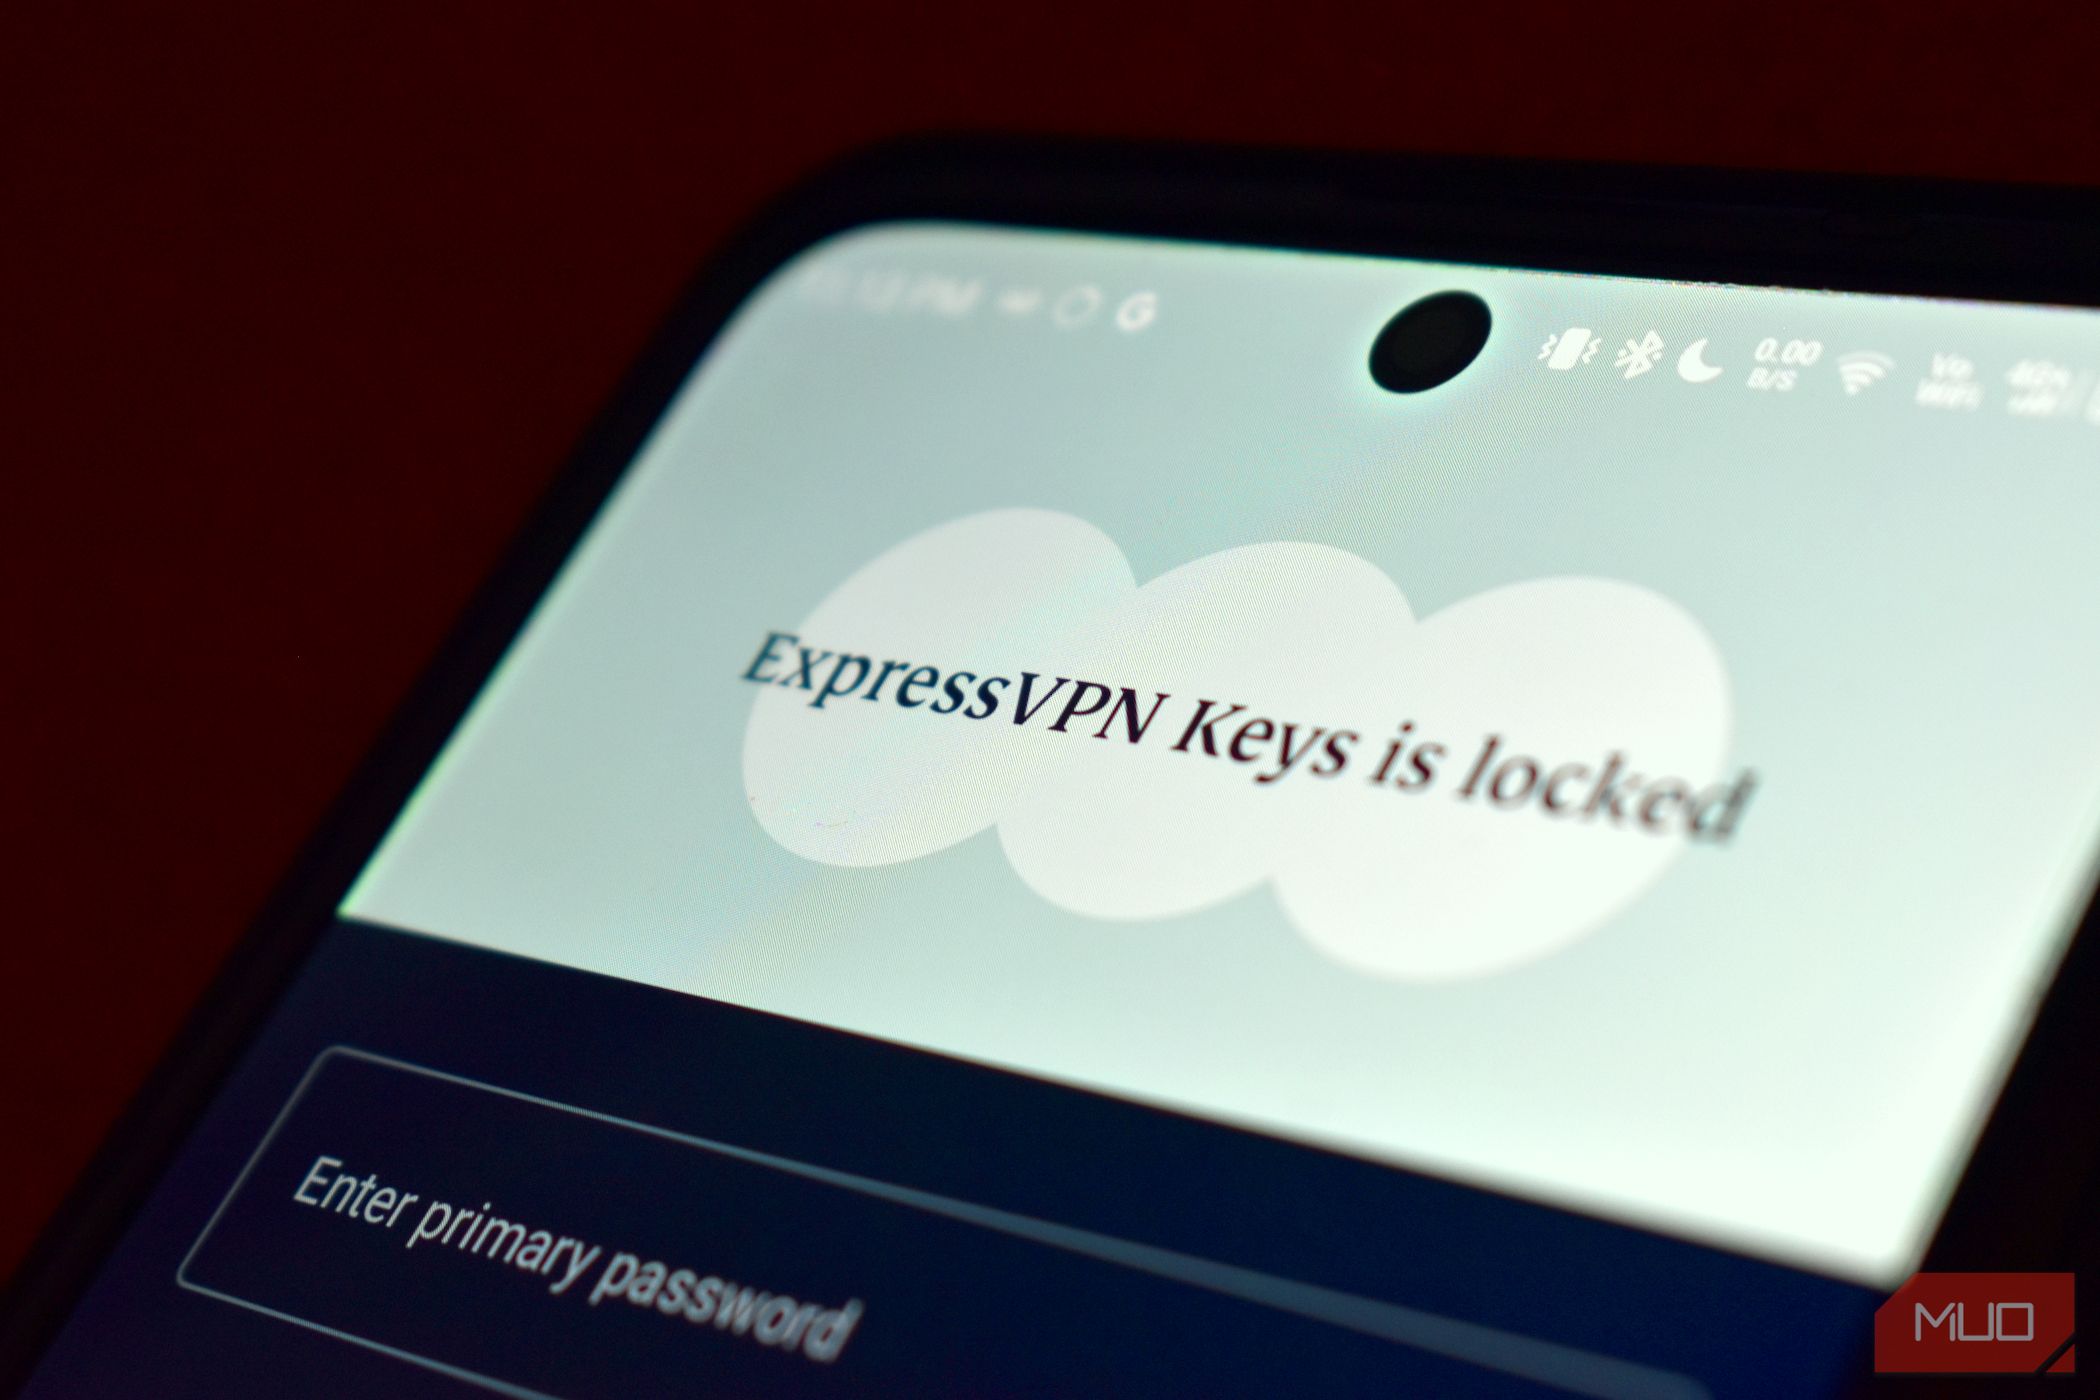 expressvpn lock screen on smartphone screen